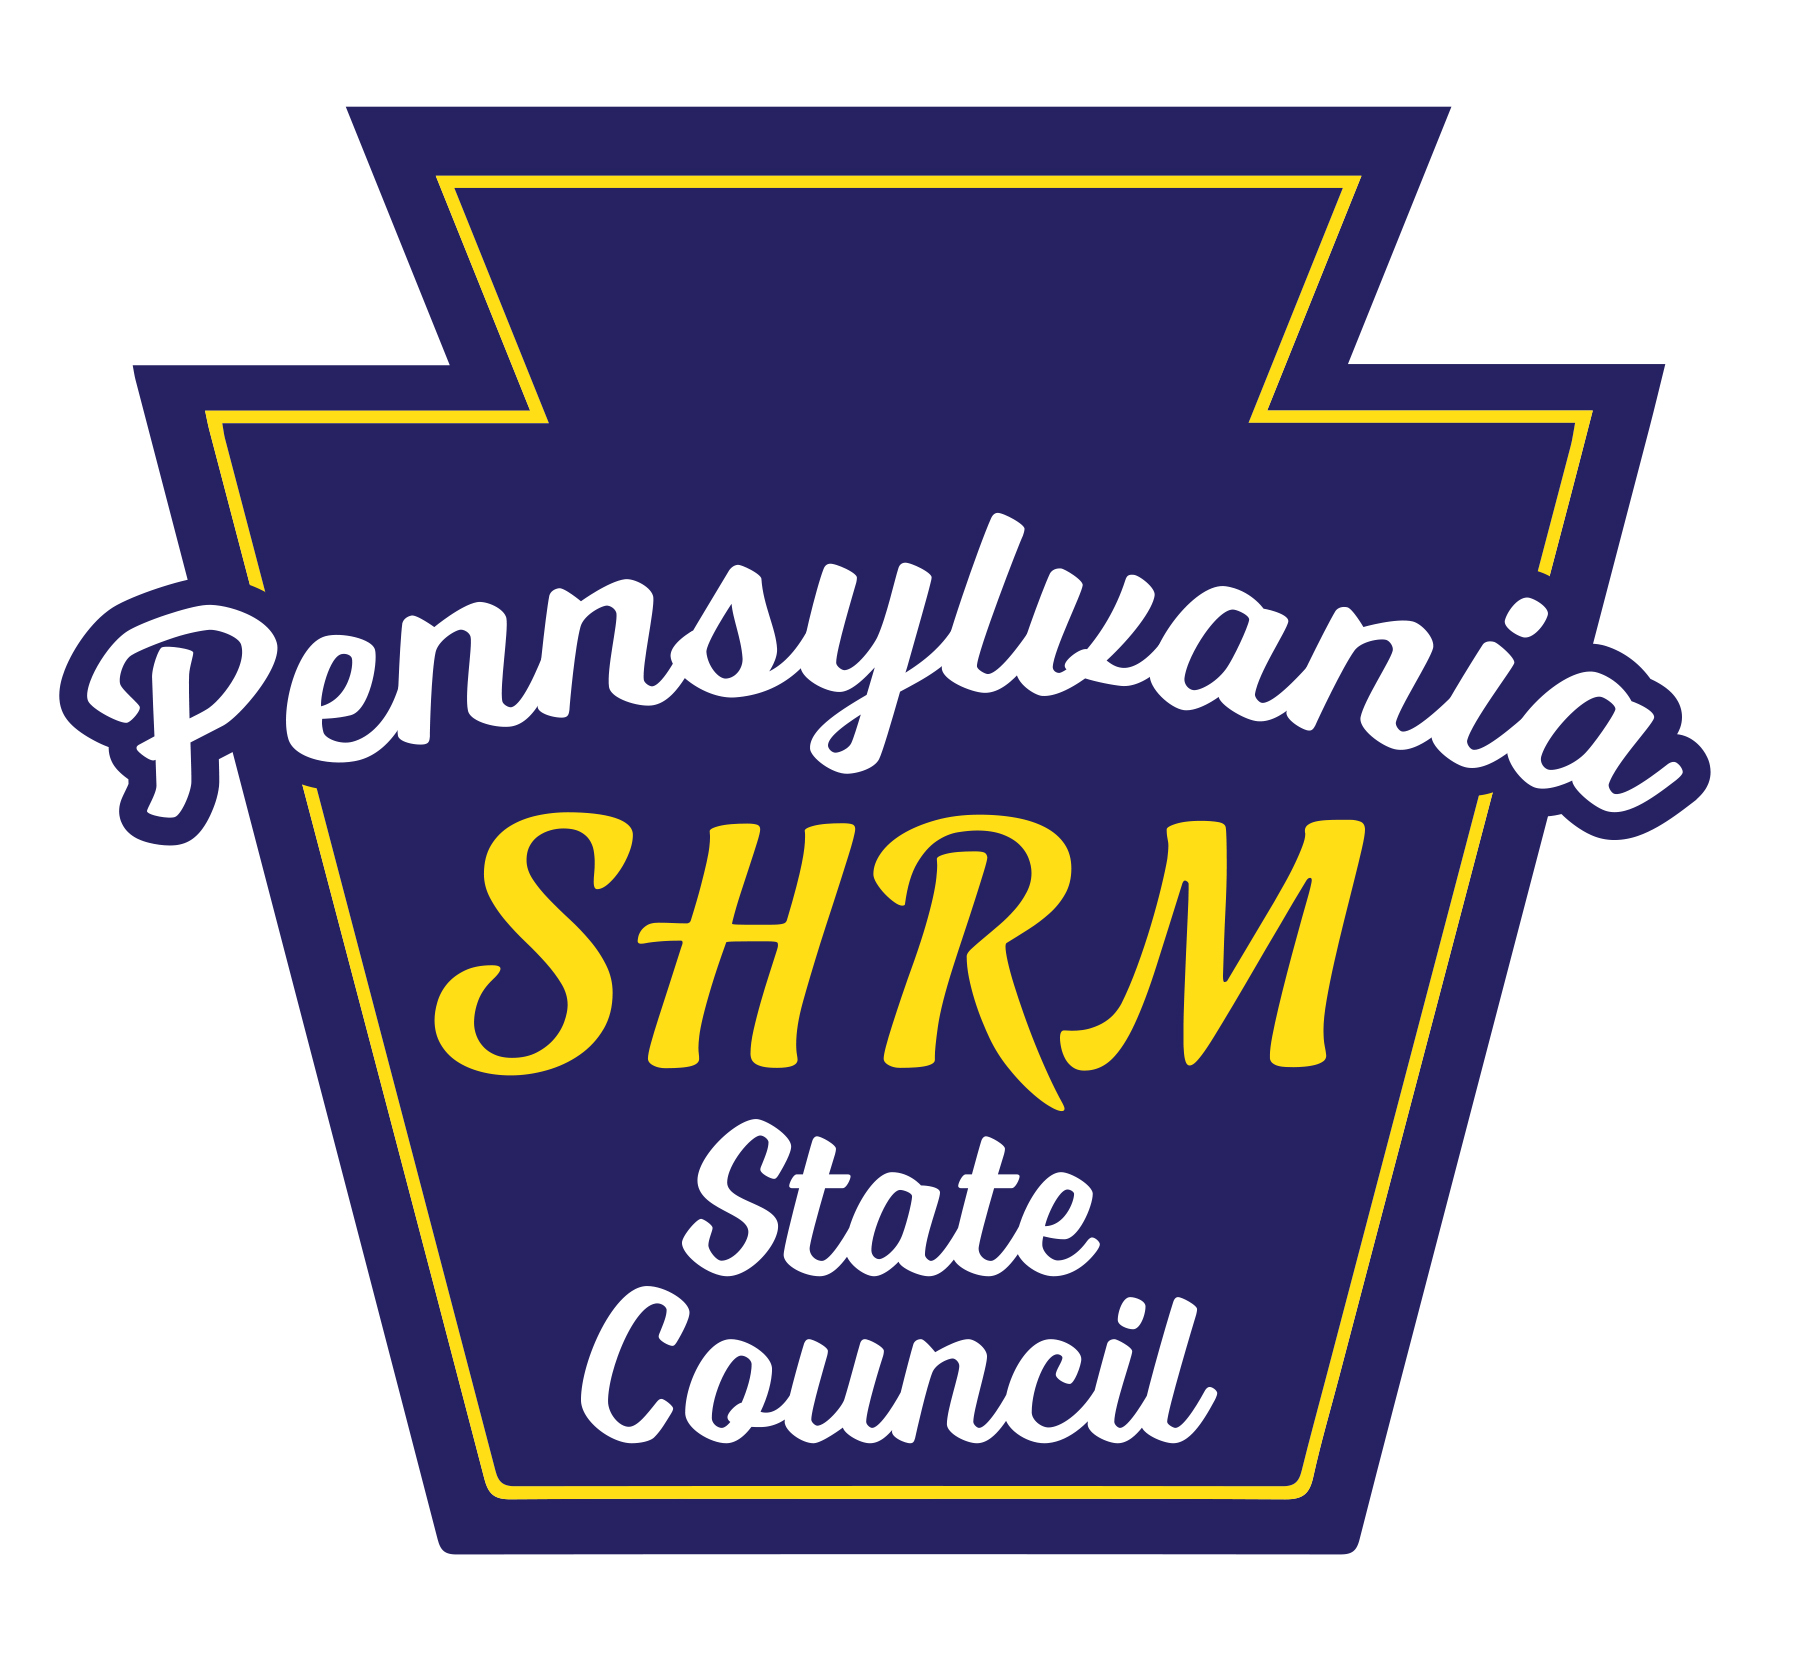 Pennsylvania State Council SHRM logo